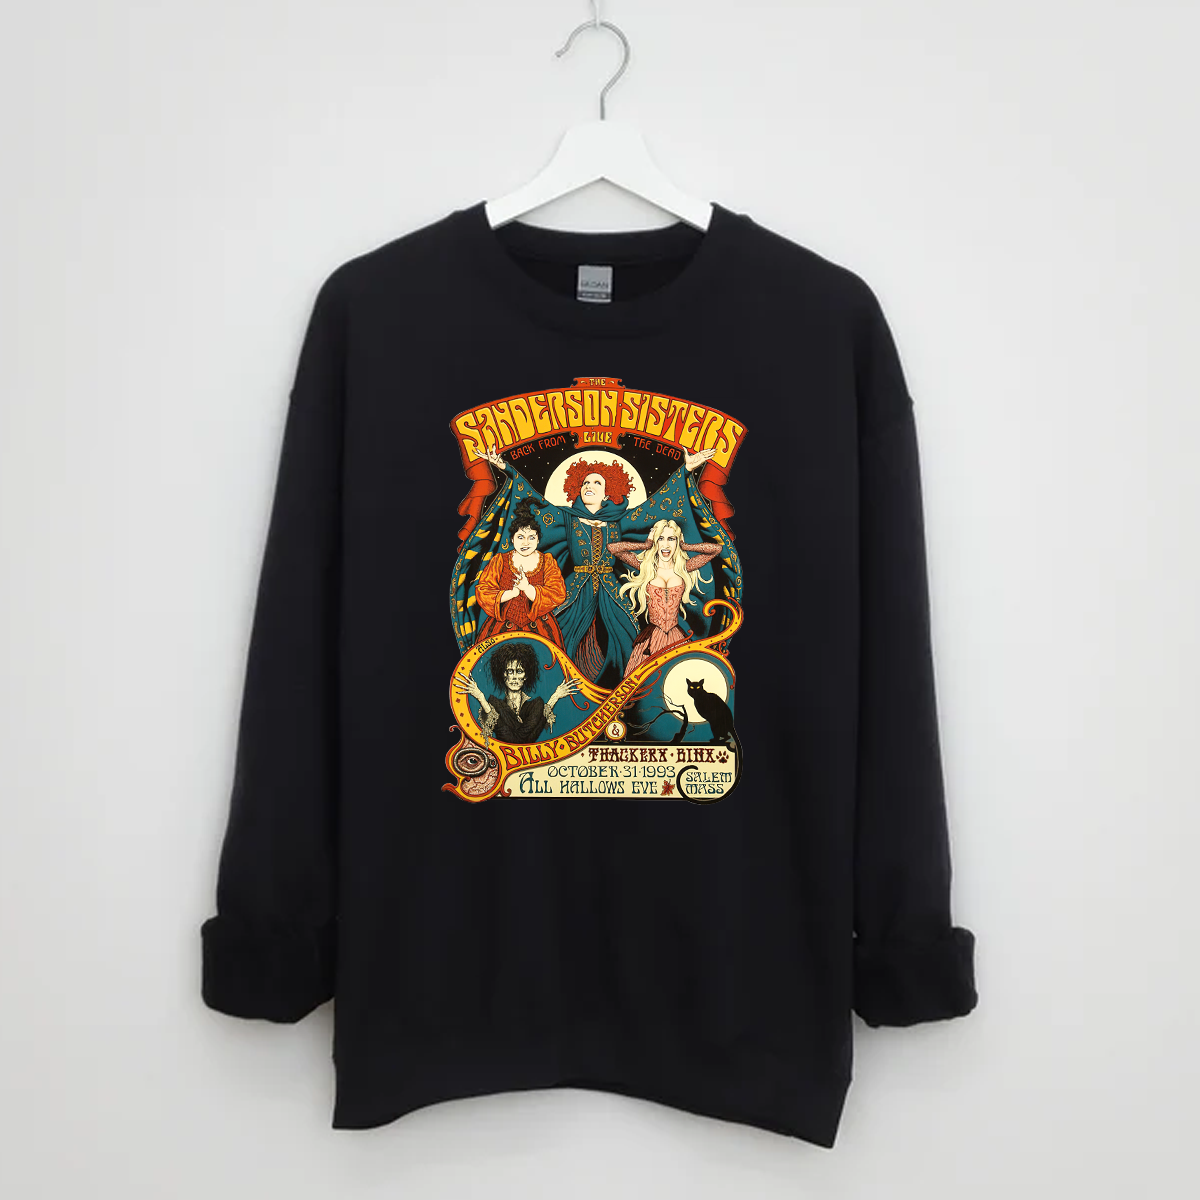 Sanderson Sisters Vintage Poster Design Black Sweatshirt - kids & adult sizes